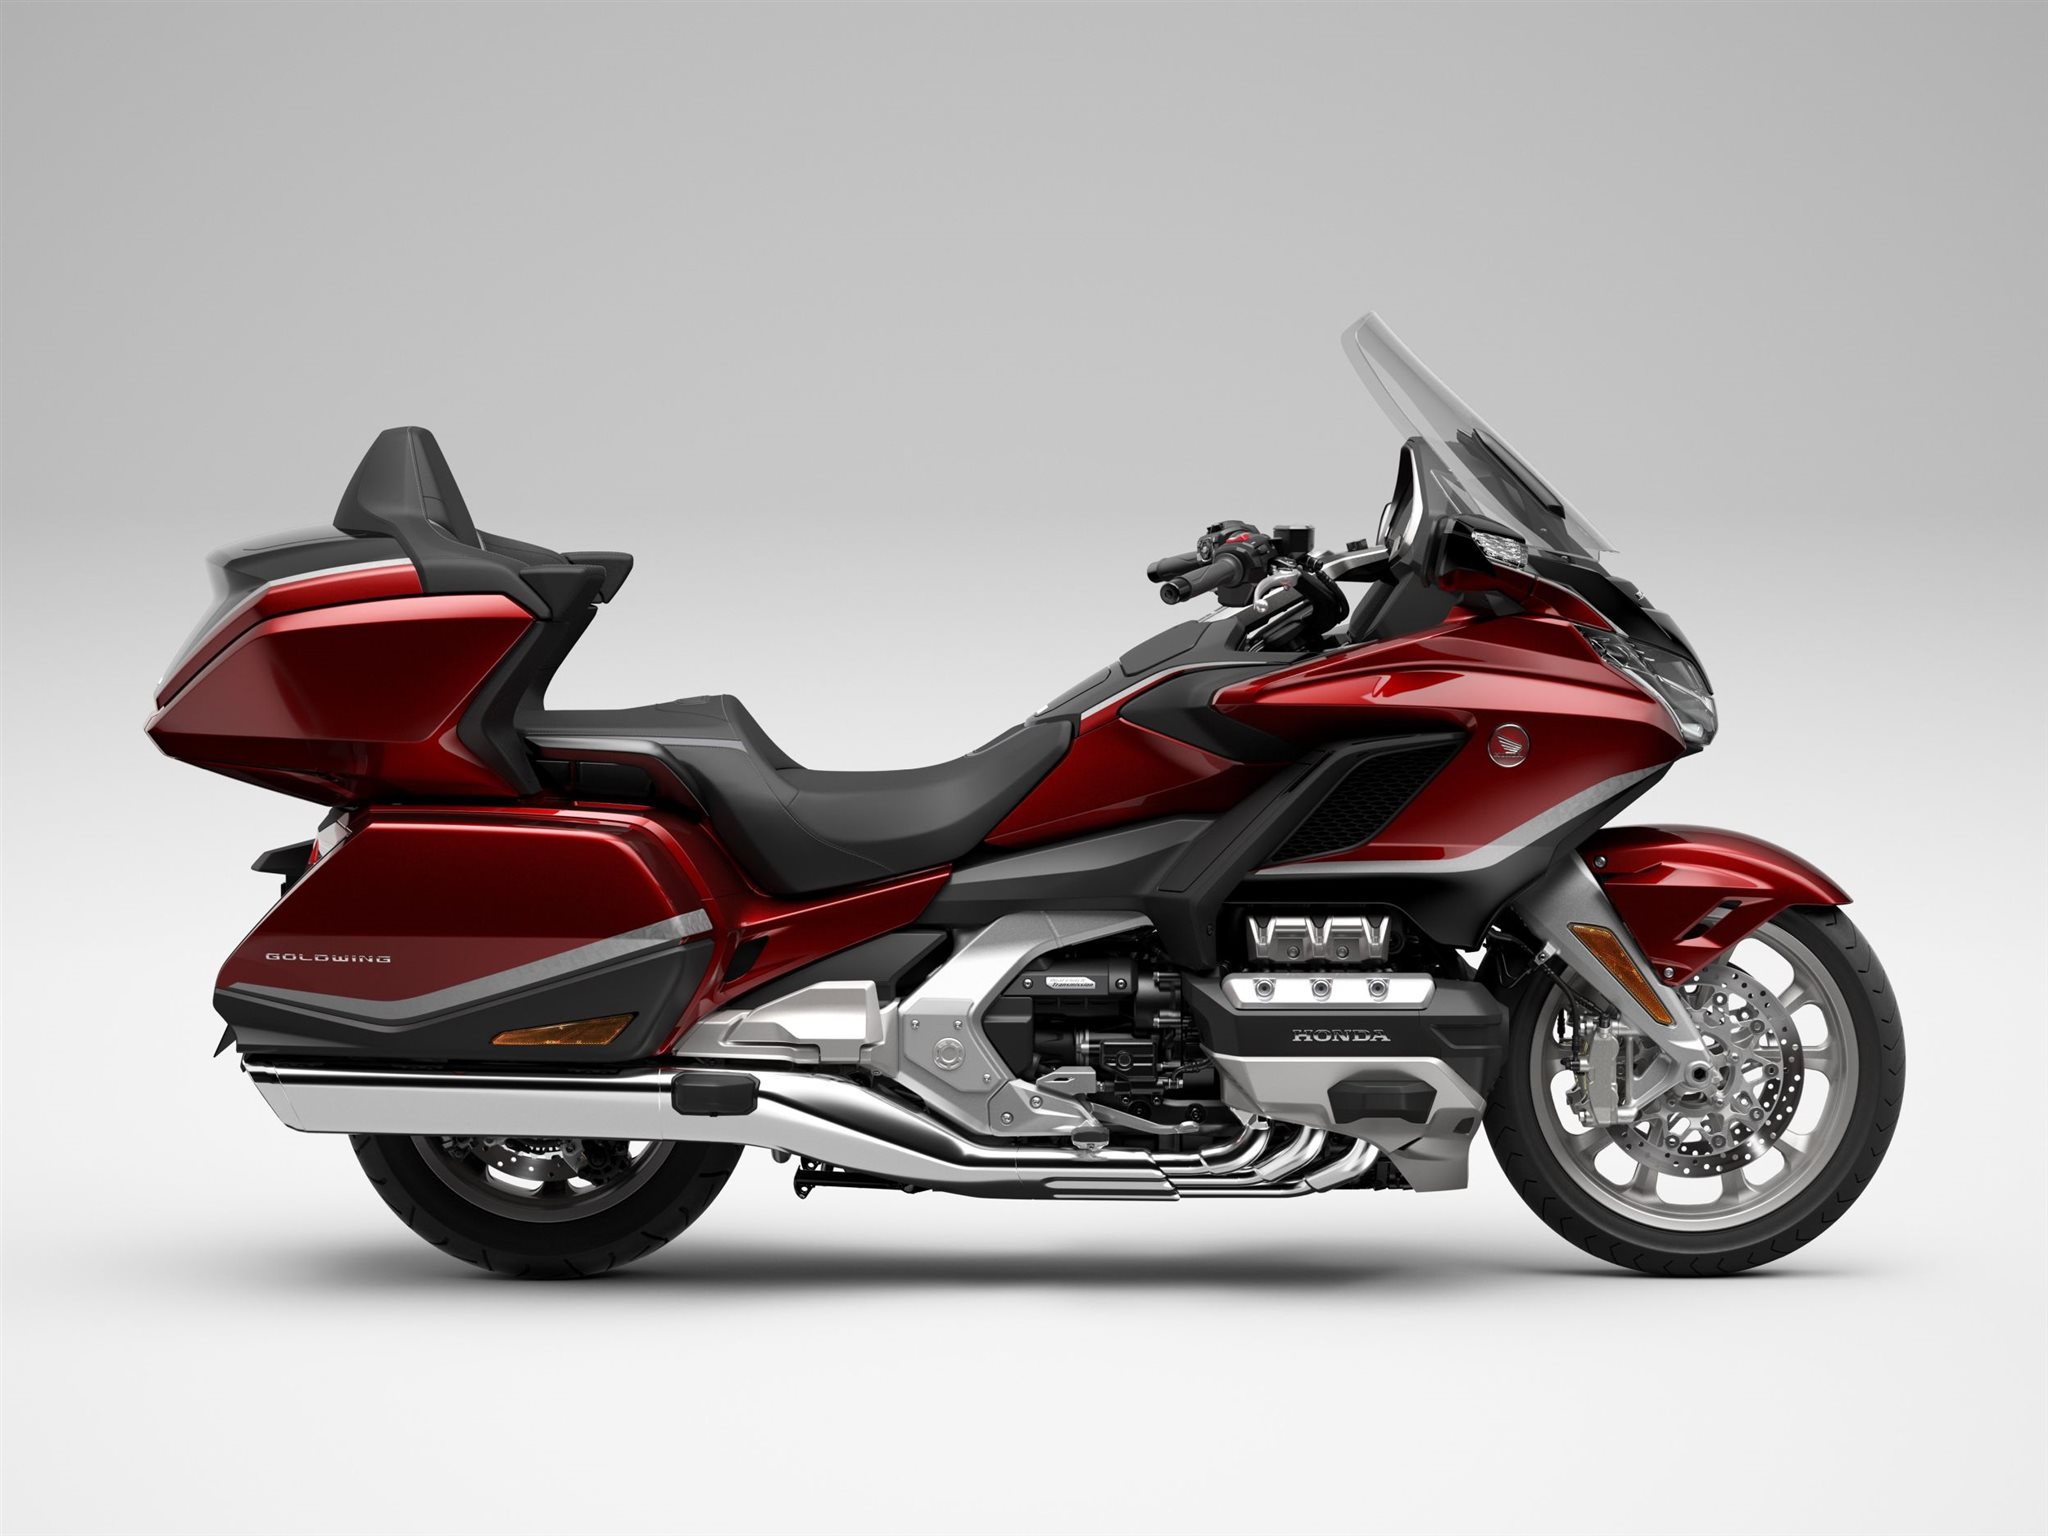 Motorrad Vergleich Honda Gl 1800 Goldwing Tour Dct 2021 Vs Bmw K 1600 Gtl 2020